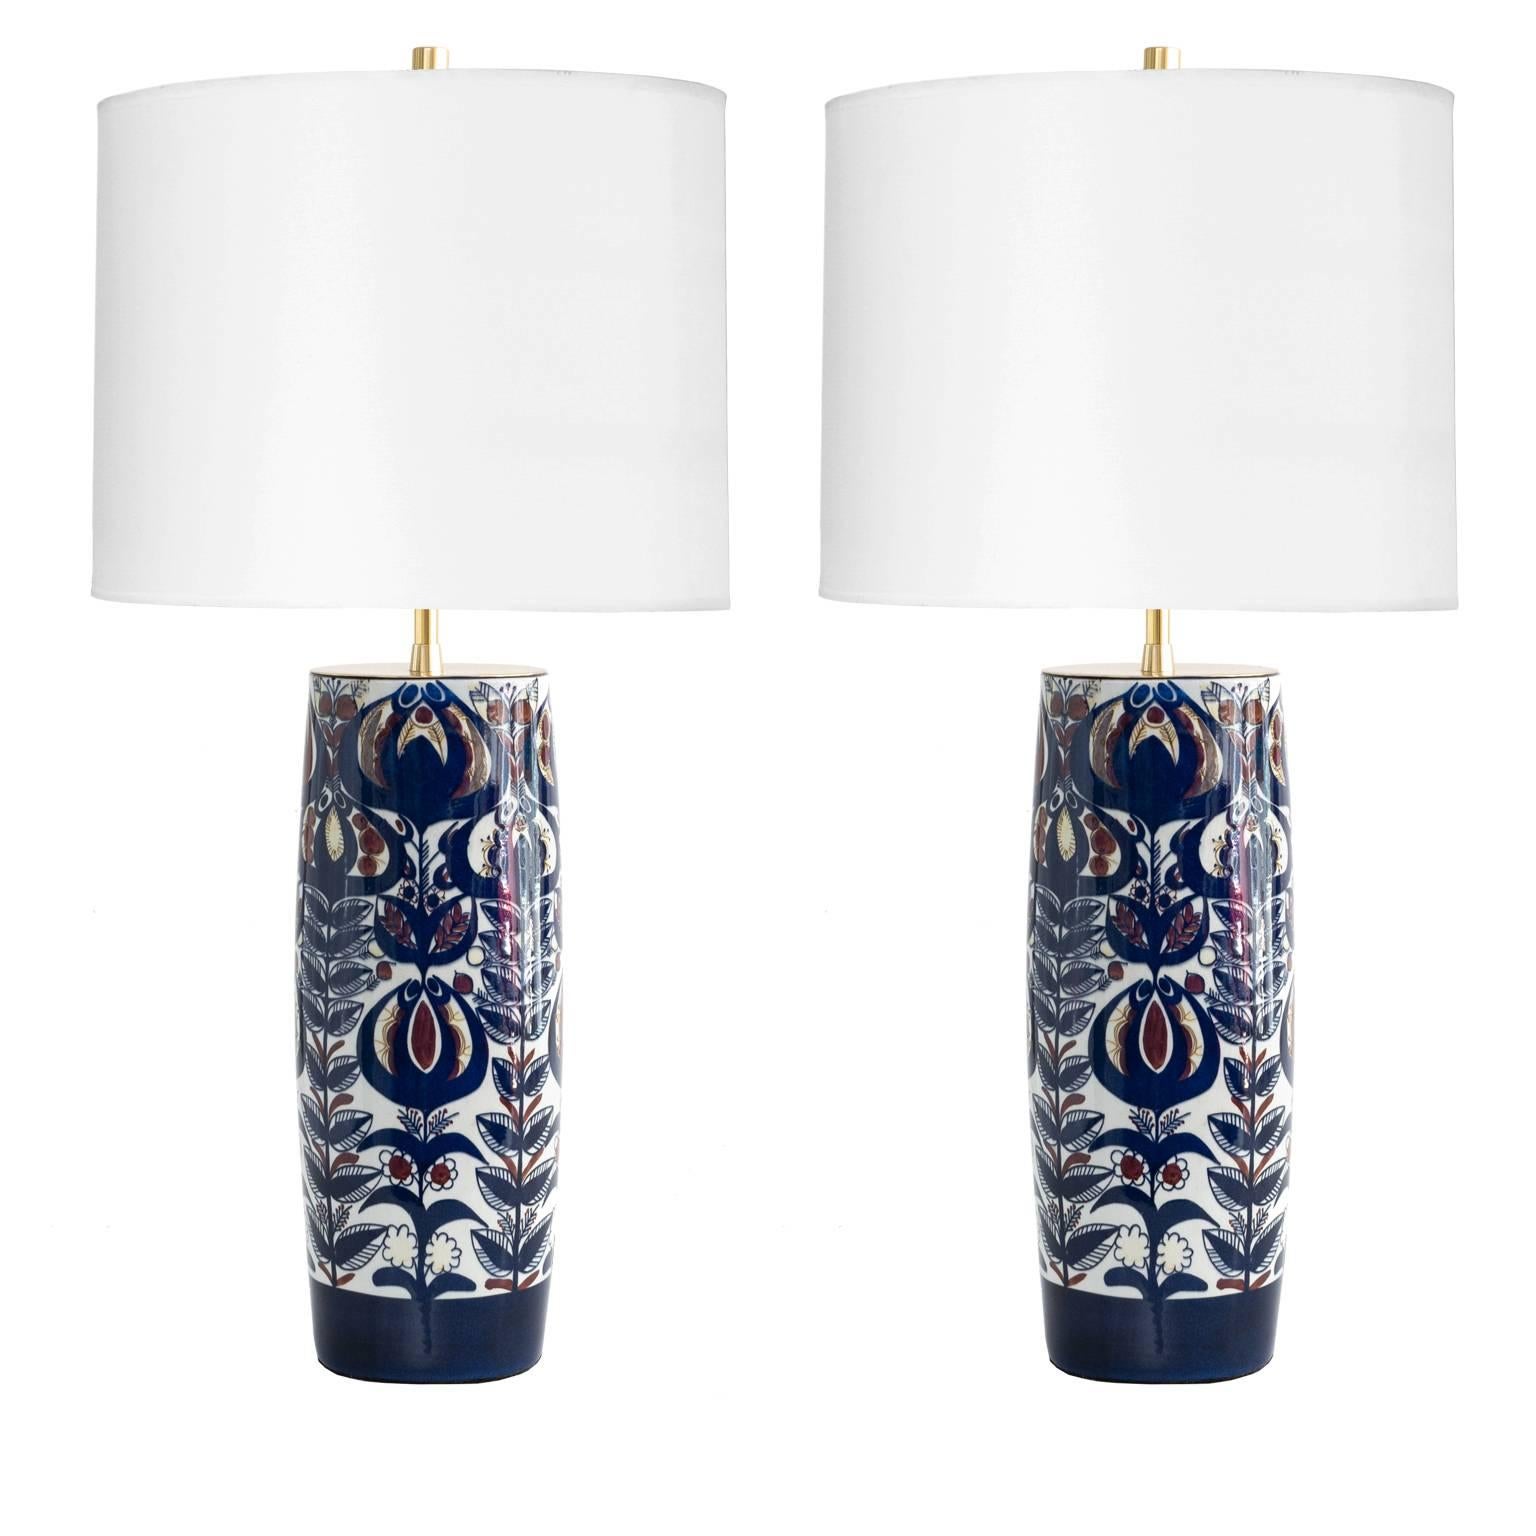 Pair of "Tenara" Porcelain Table Lamps Designed by Berte Jessen, Aluminia For Sale